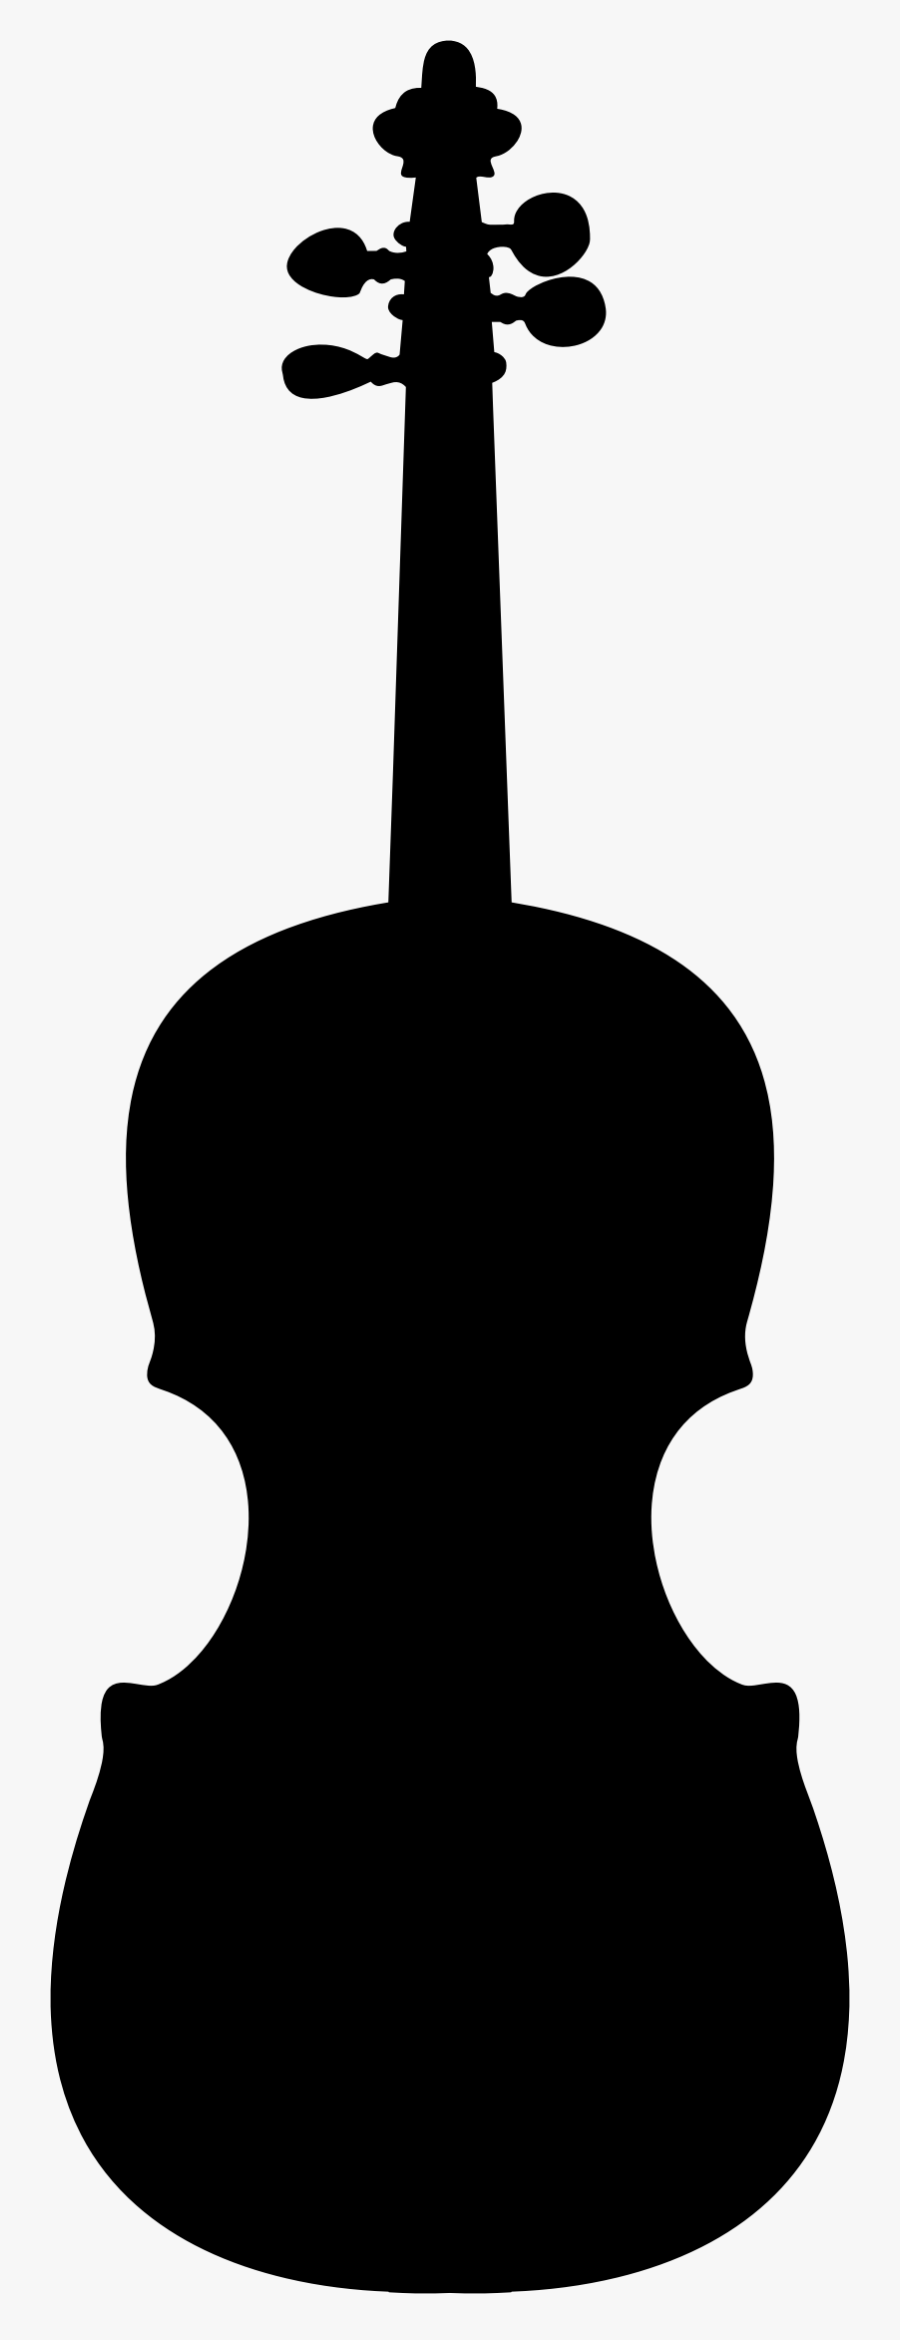 Fiddle Violin Instrument Free Picture - Violin Silhouette, Transparent Clipart